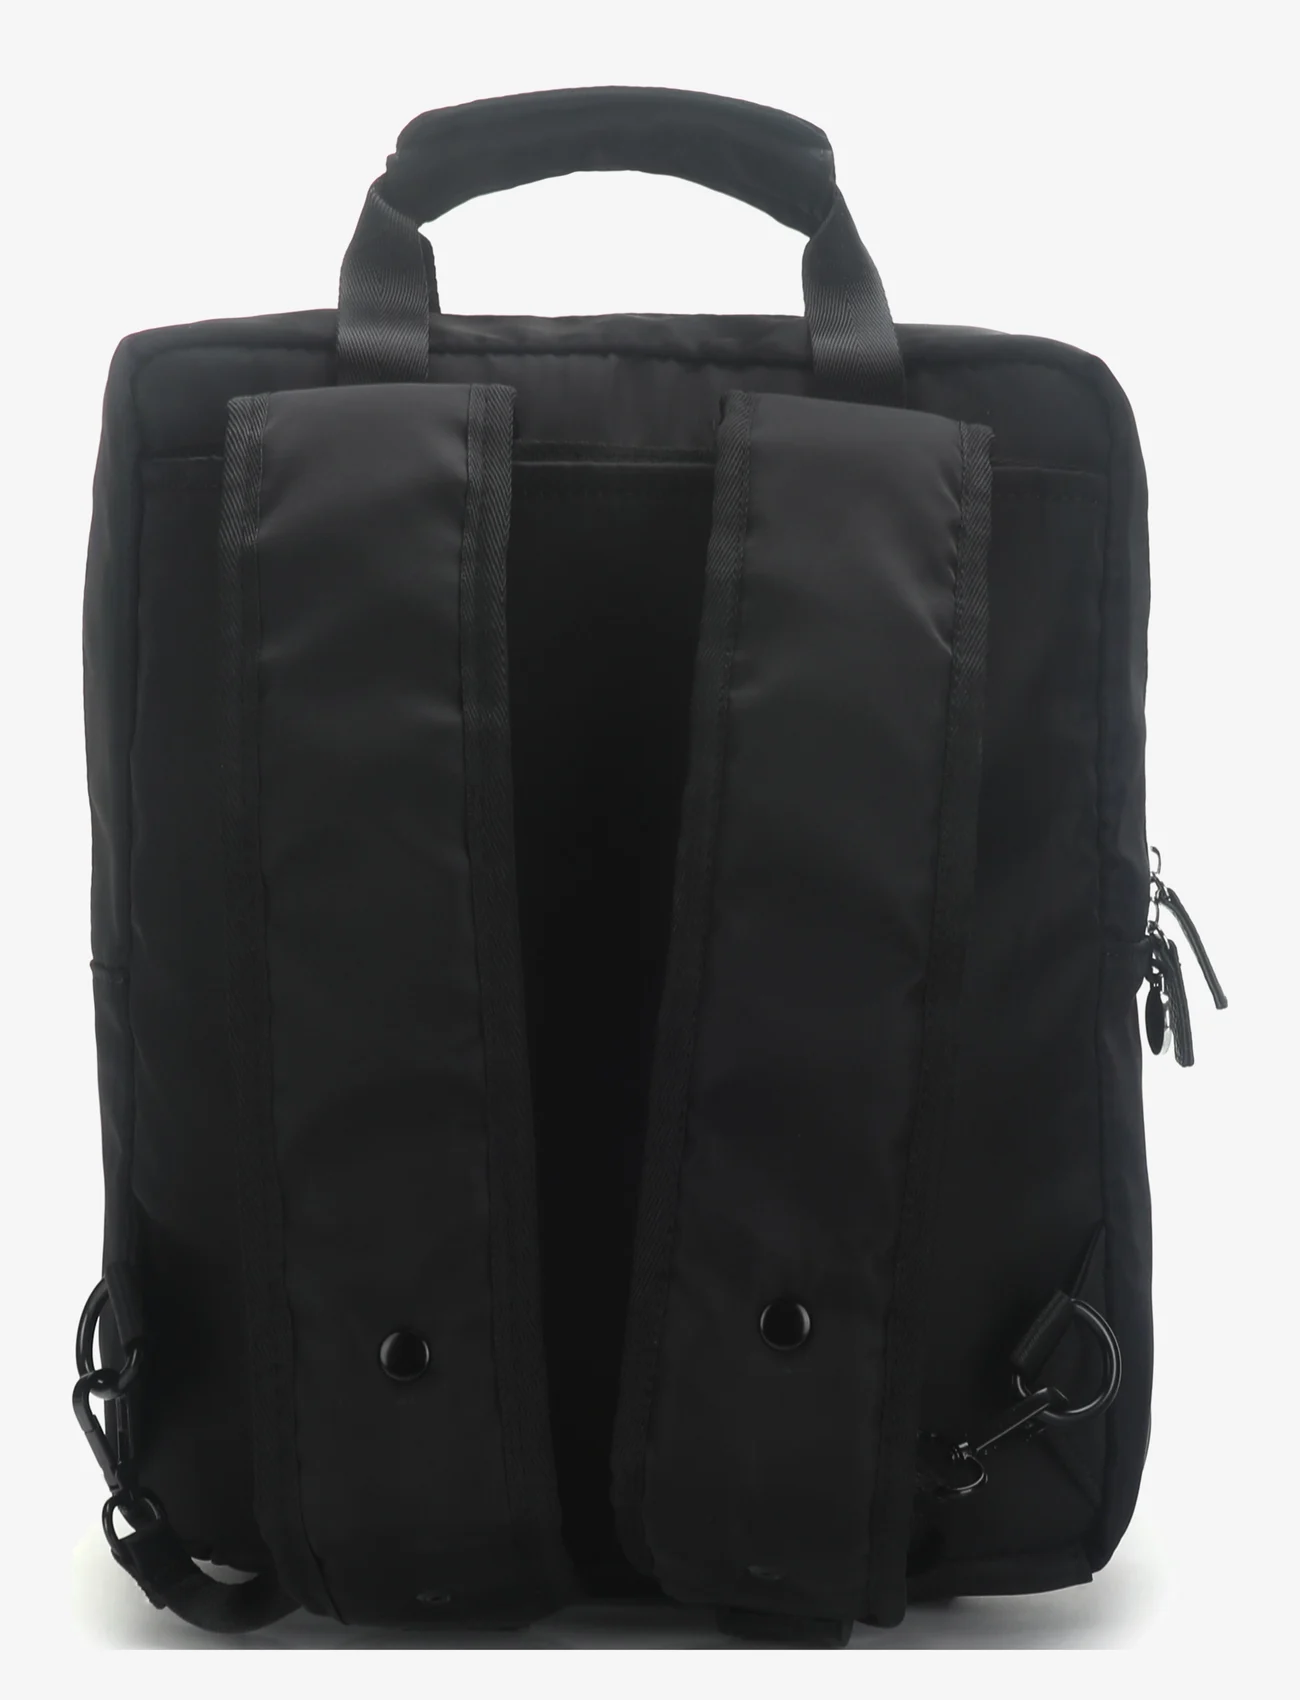 Adax - Novara backpack Max - kvinder - black - 1